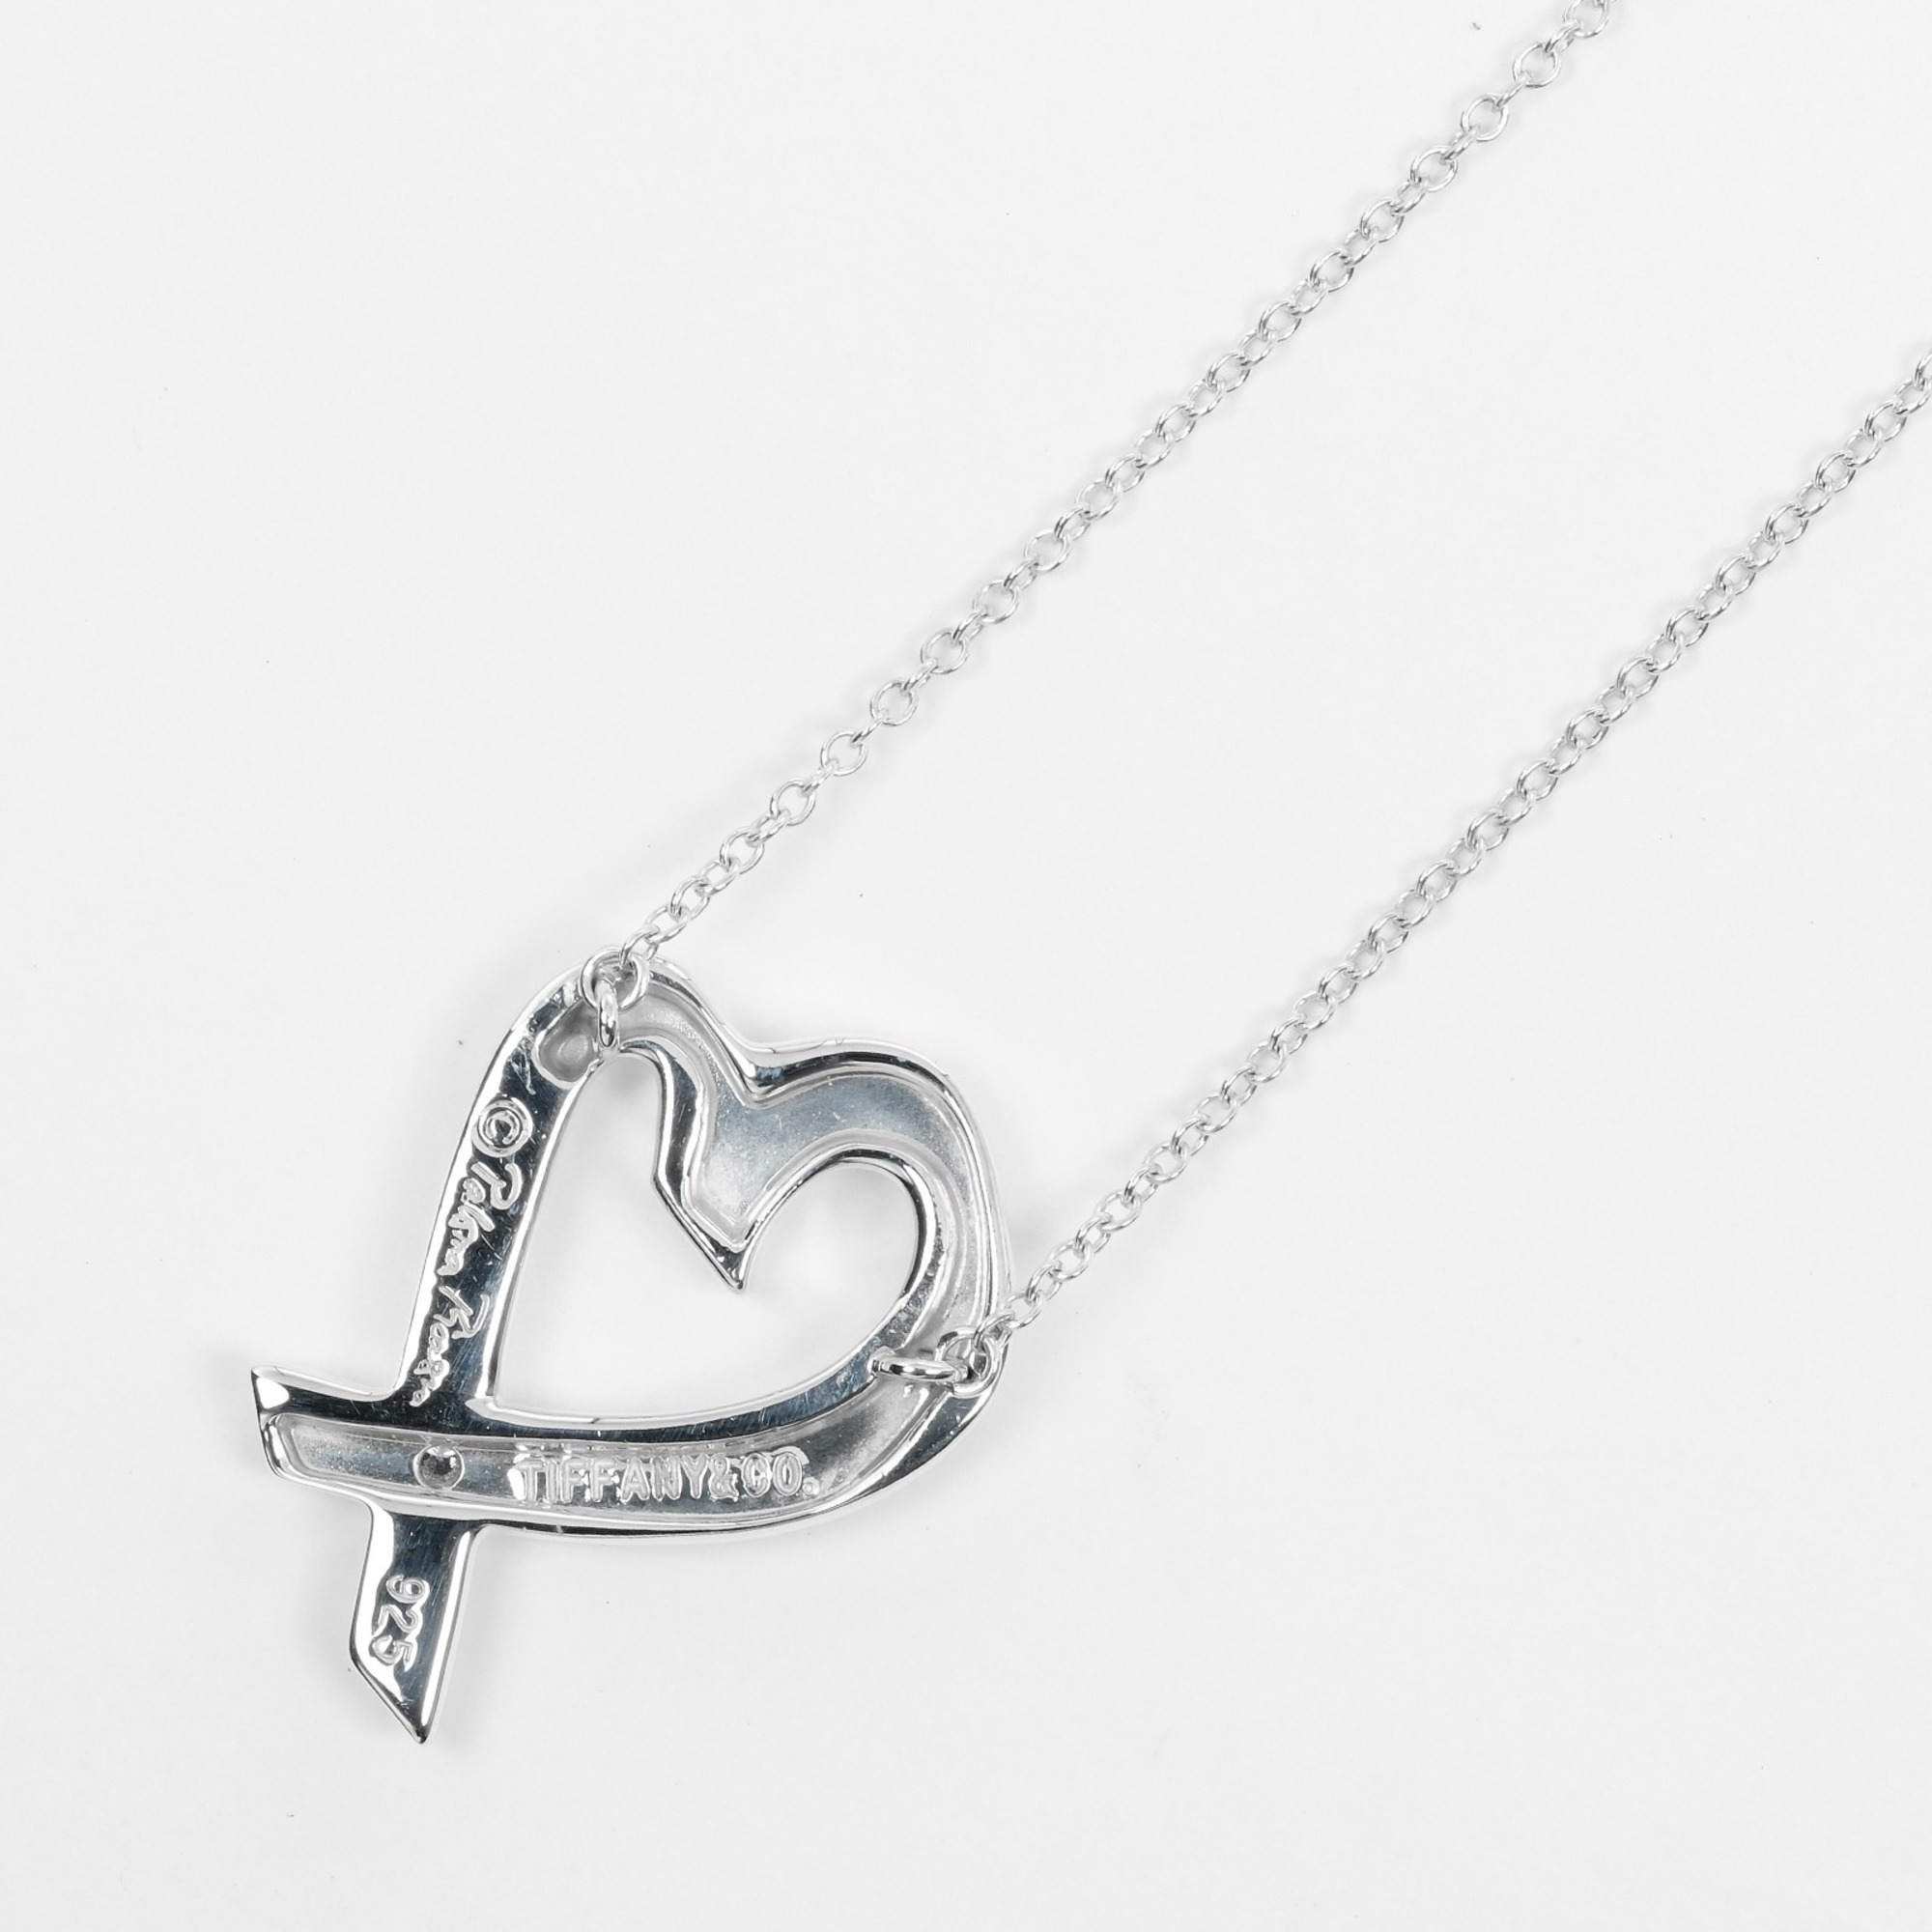 Tiffany & Co. Loving Heart Necklace, Silver 925, Diamond, Approx. 3.9g